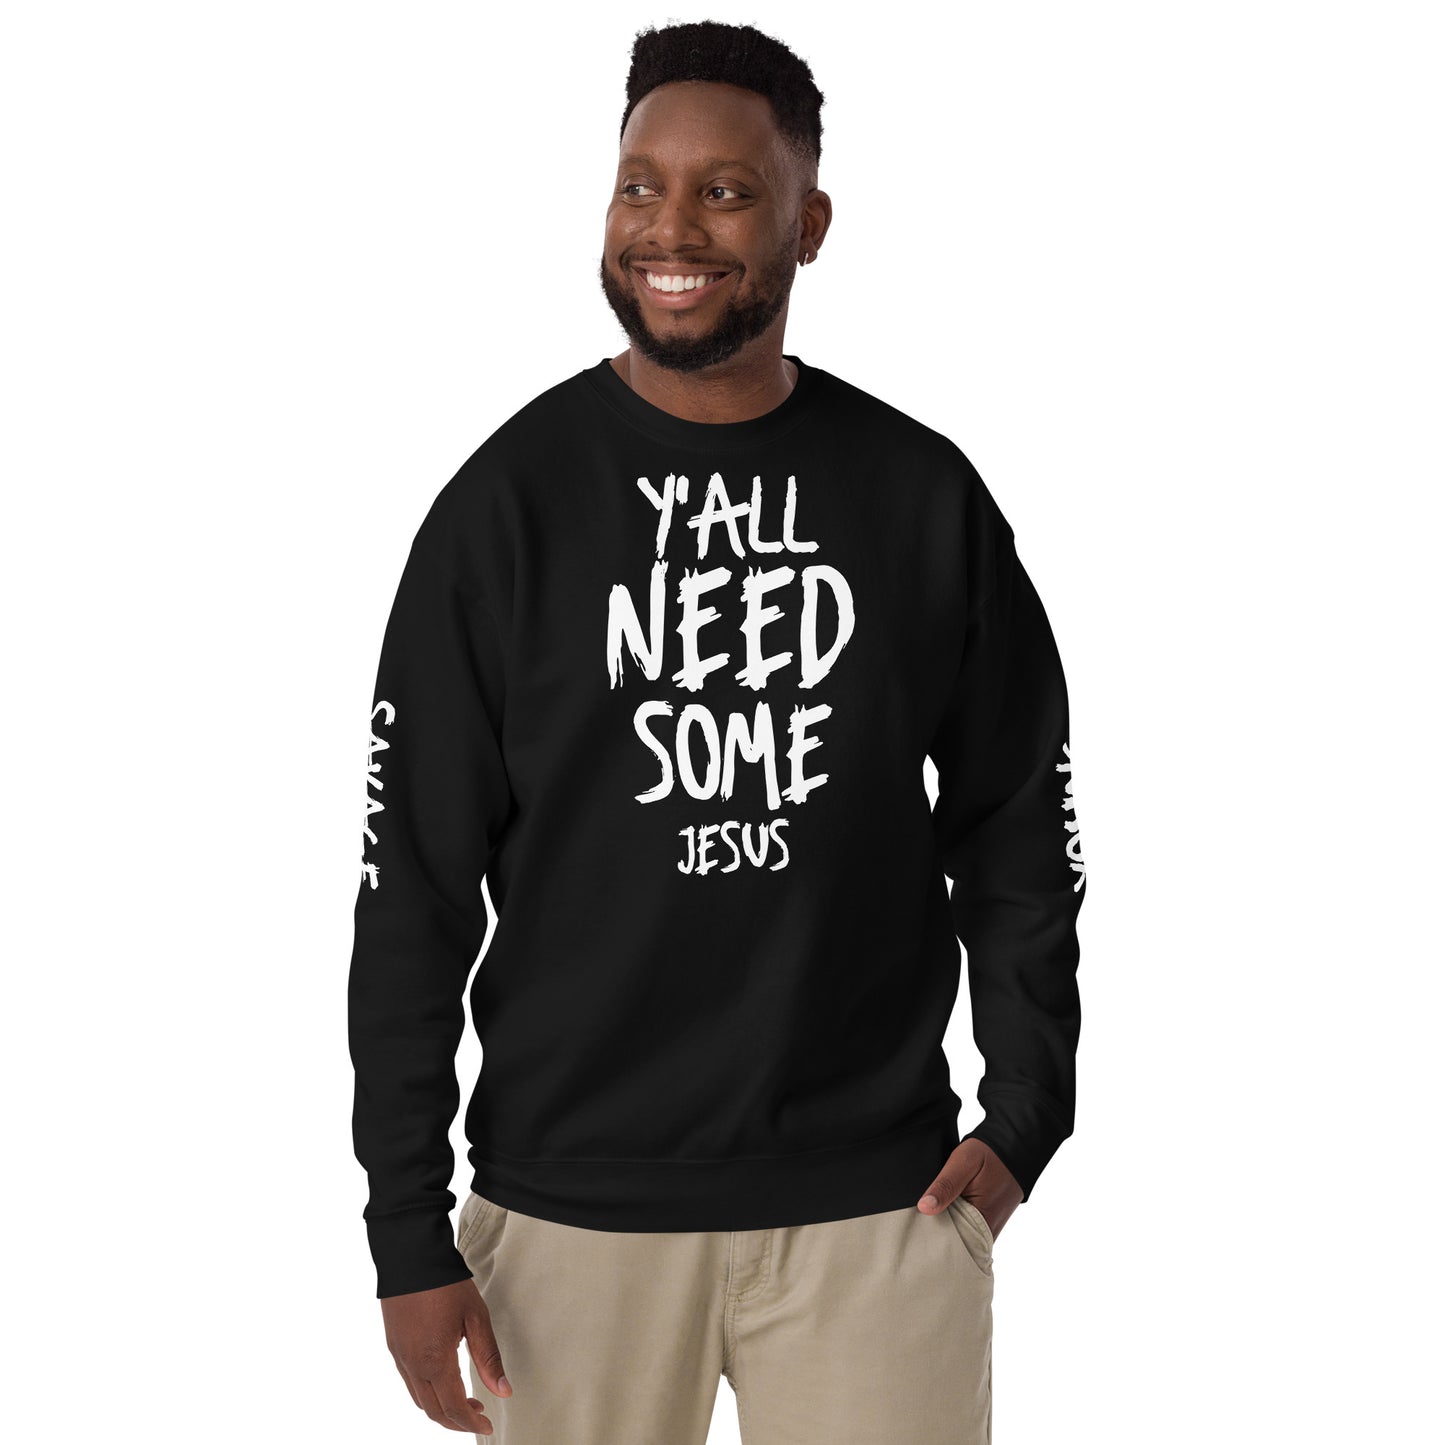 Y'all Need Some Jesus - Unisex Premium Sweatshirt